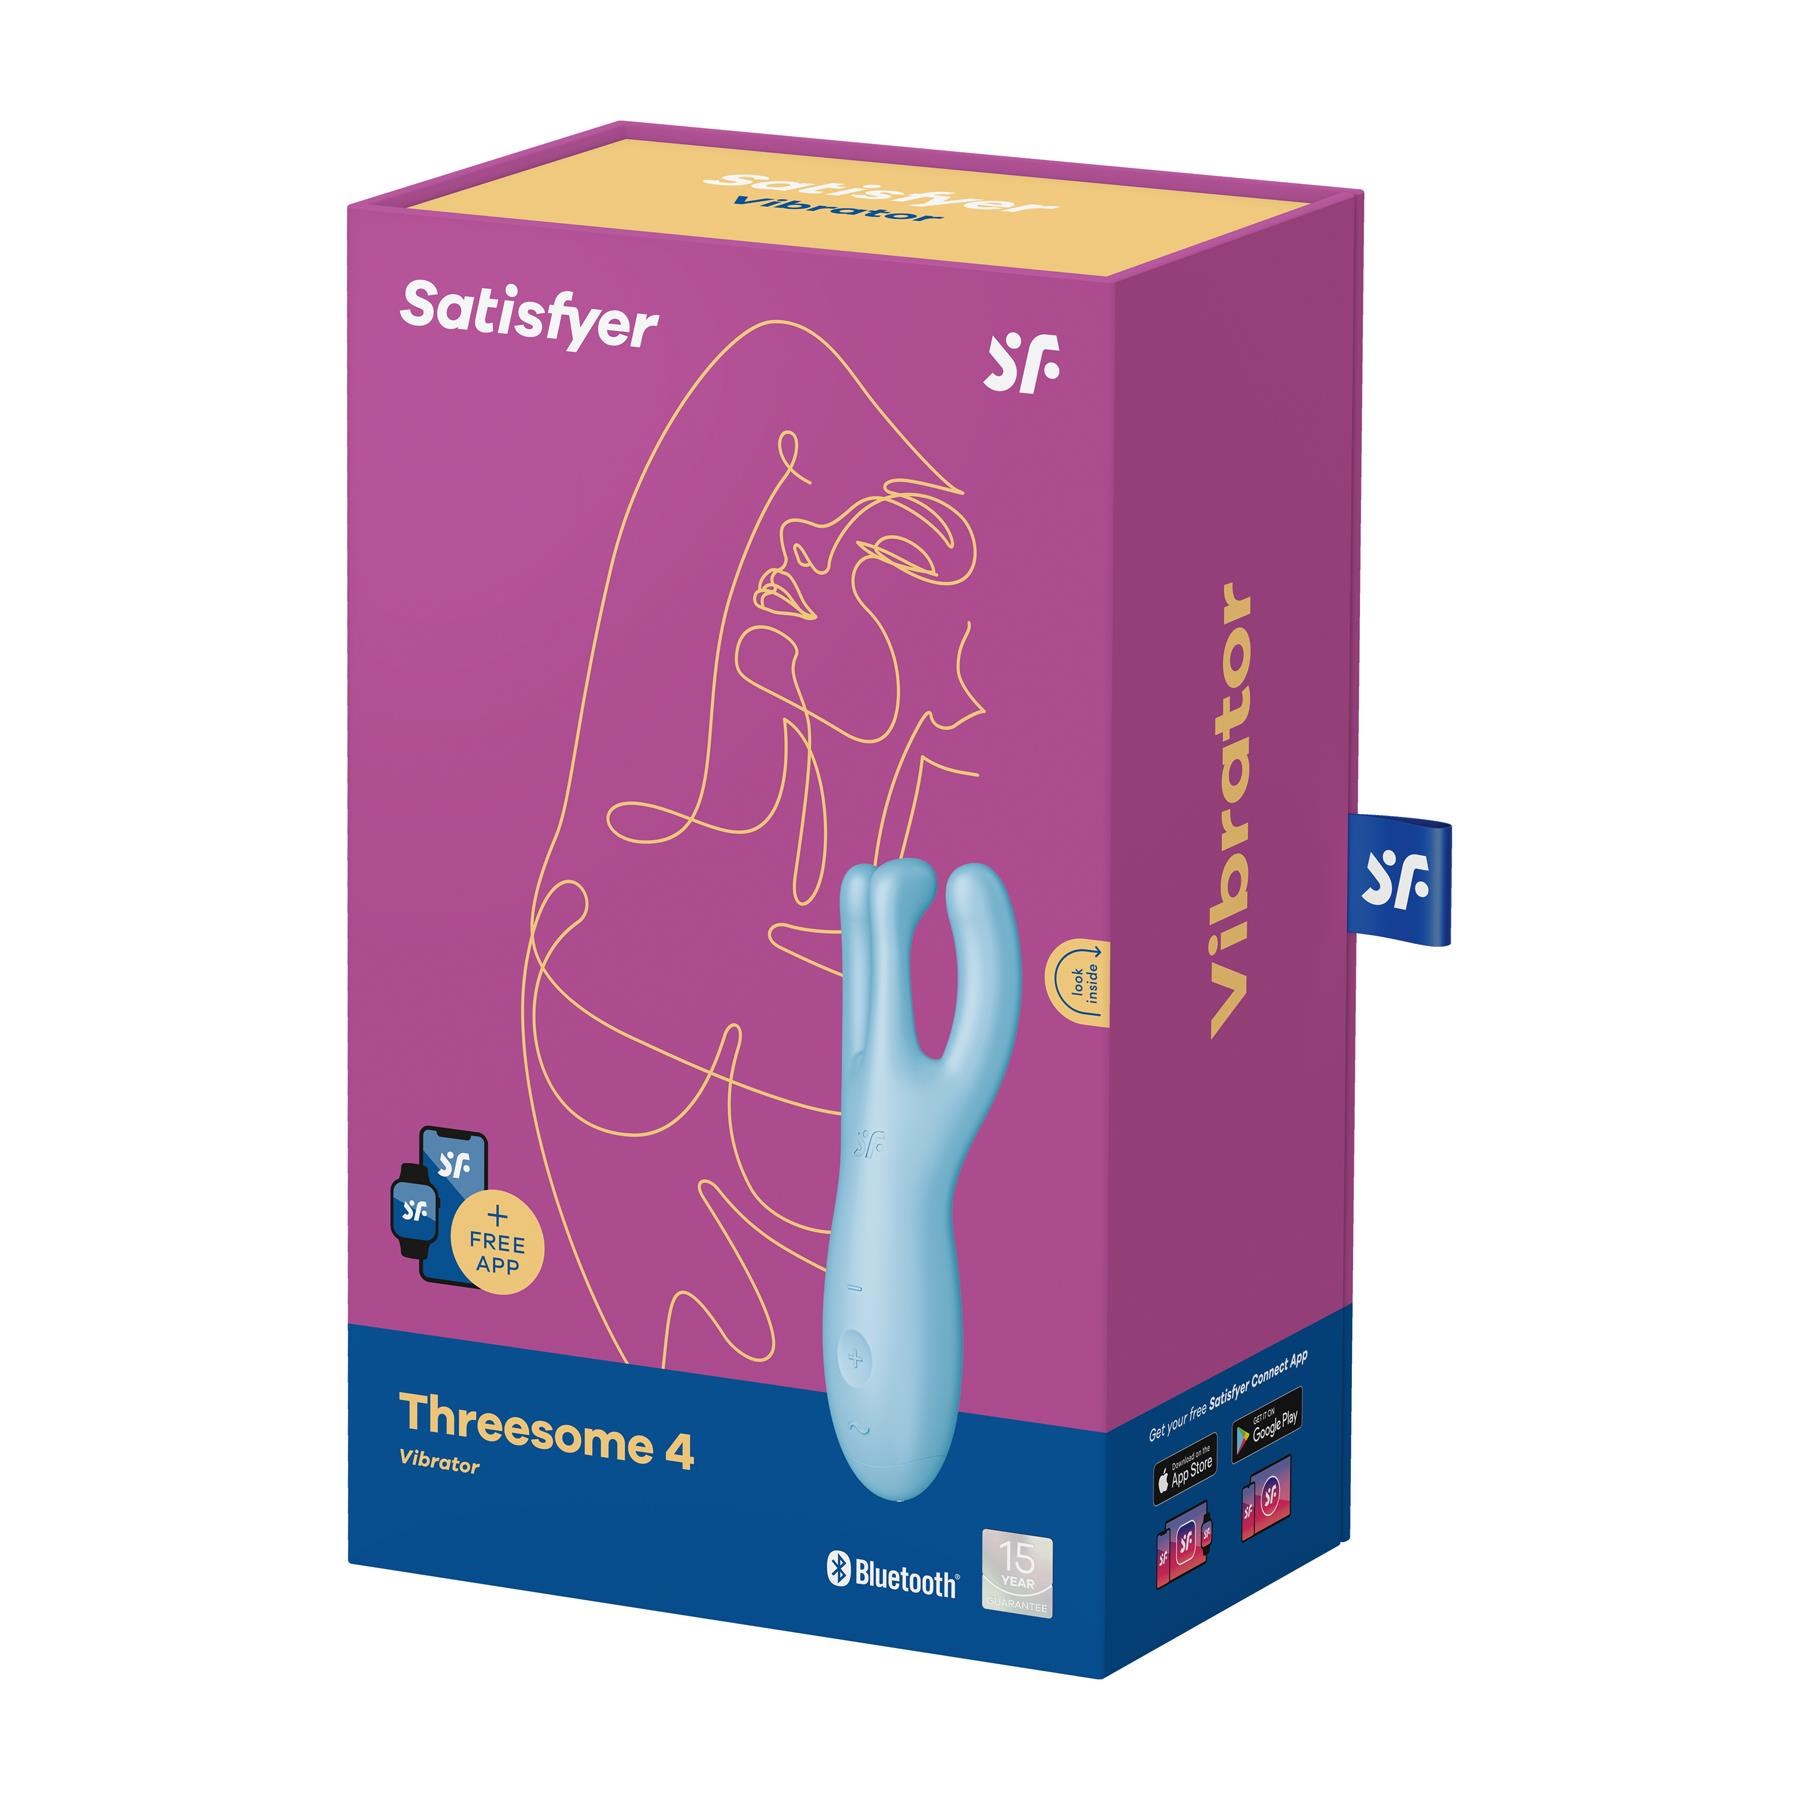 Satisfyer Threesome 4 Vibrator - Packaging Shot